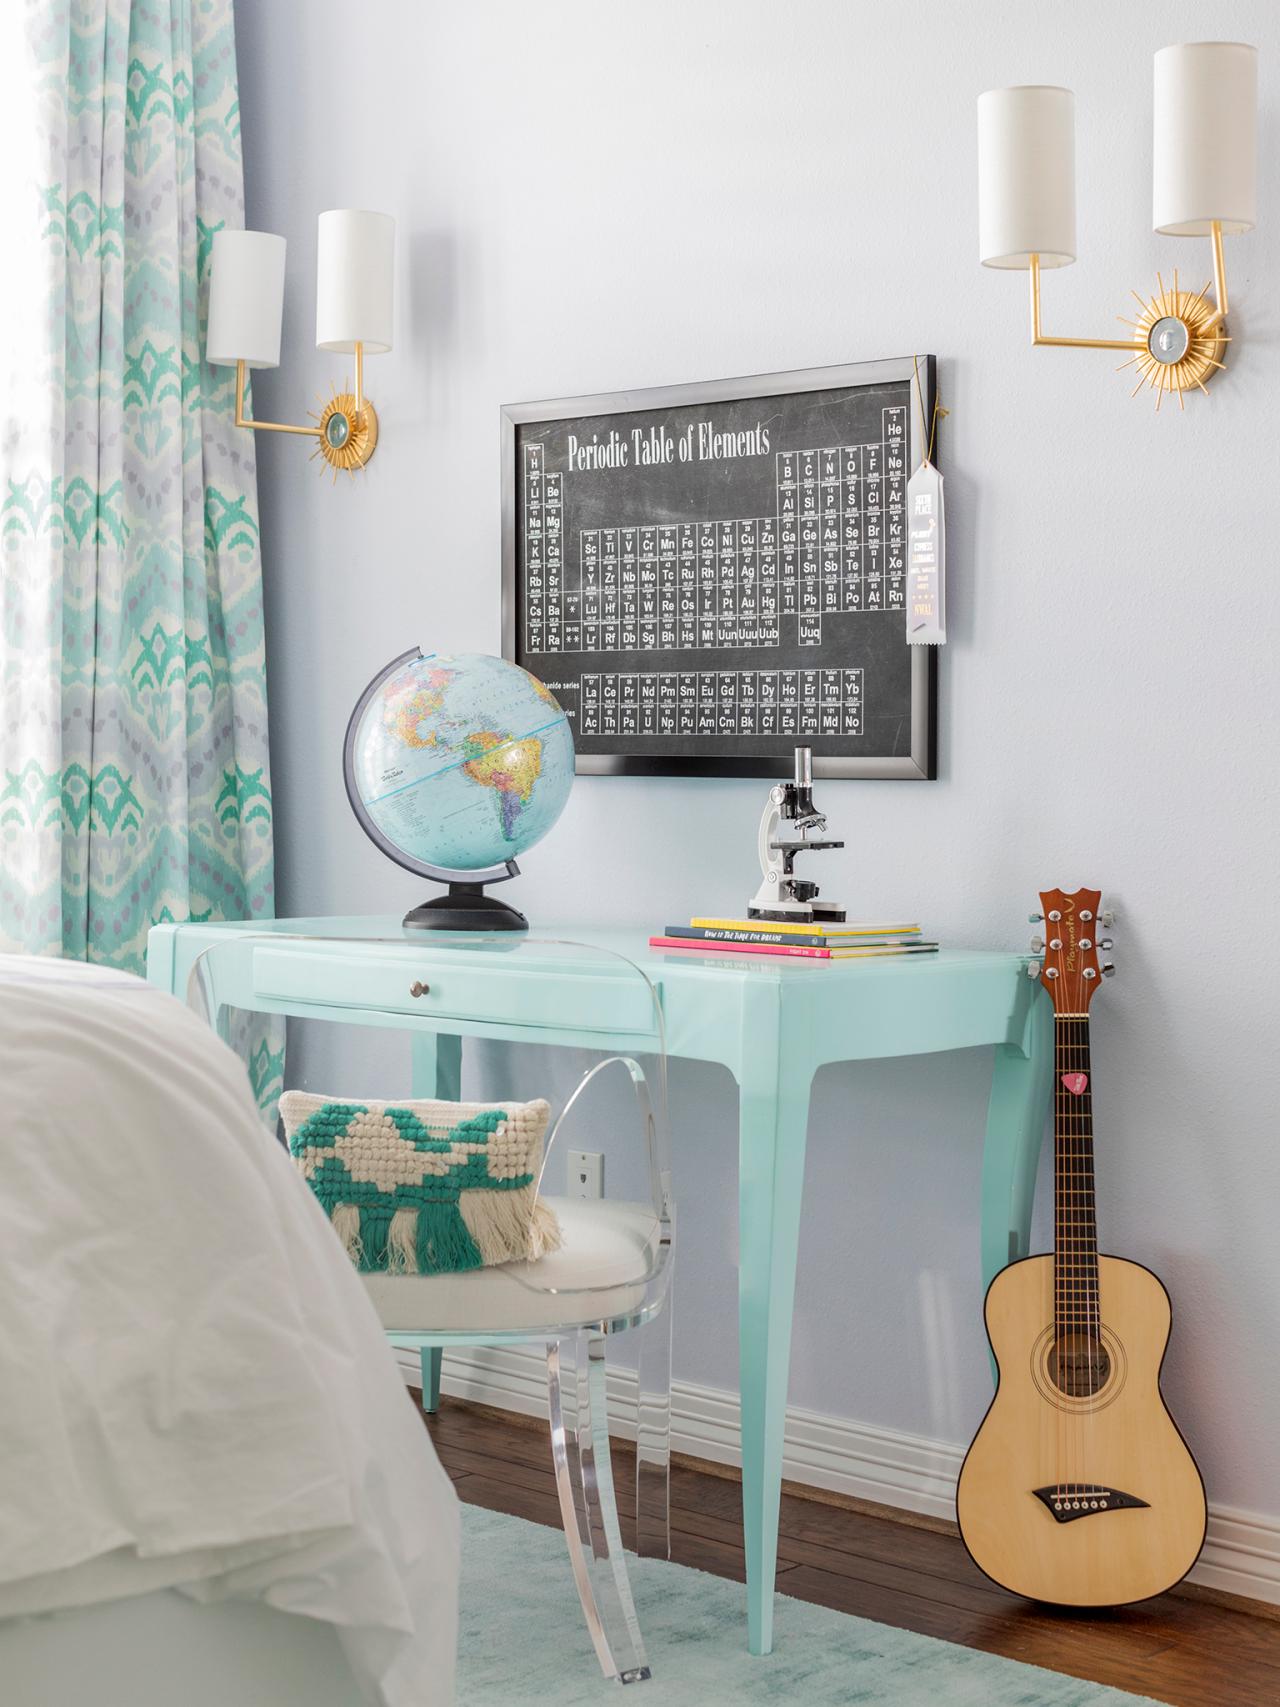 65 Dorm Room Decorating Ideas & Decor Essentials